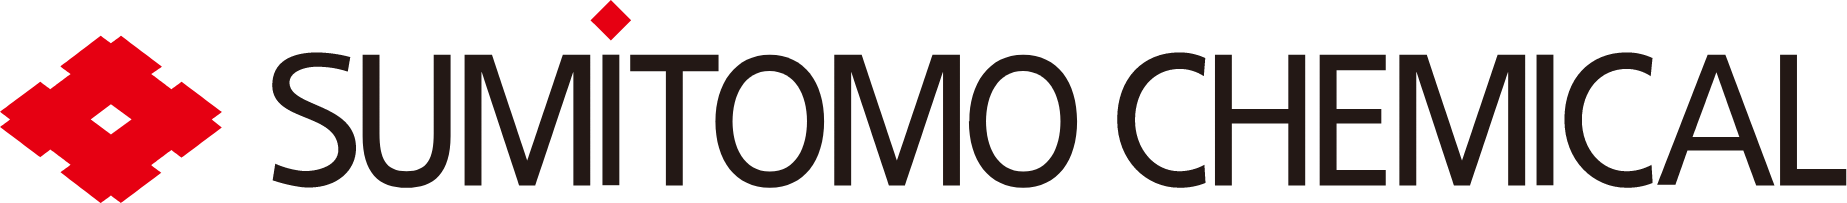 Sumitomo Chemical
 logo large (transparent PNG)